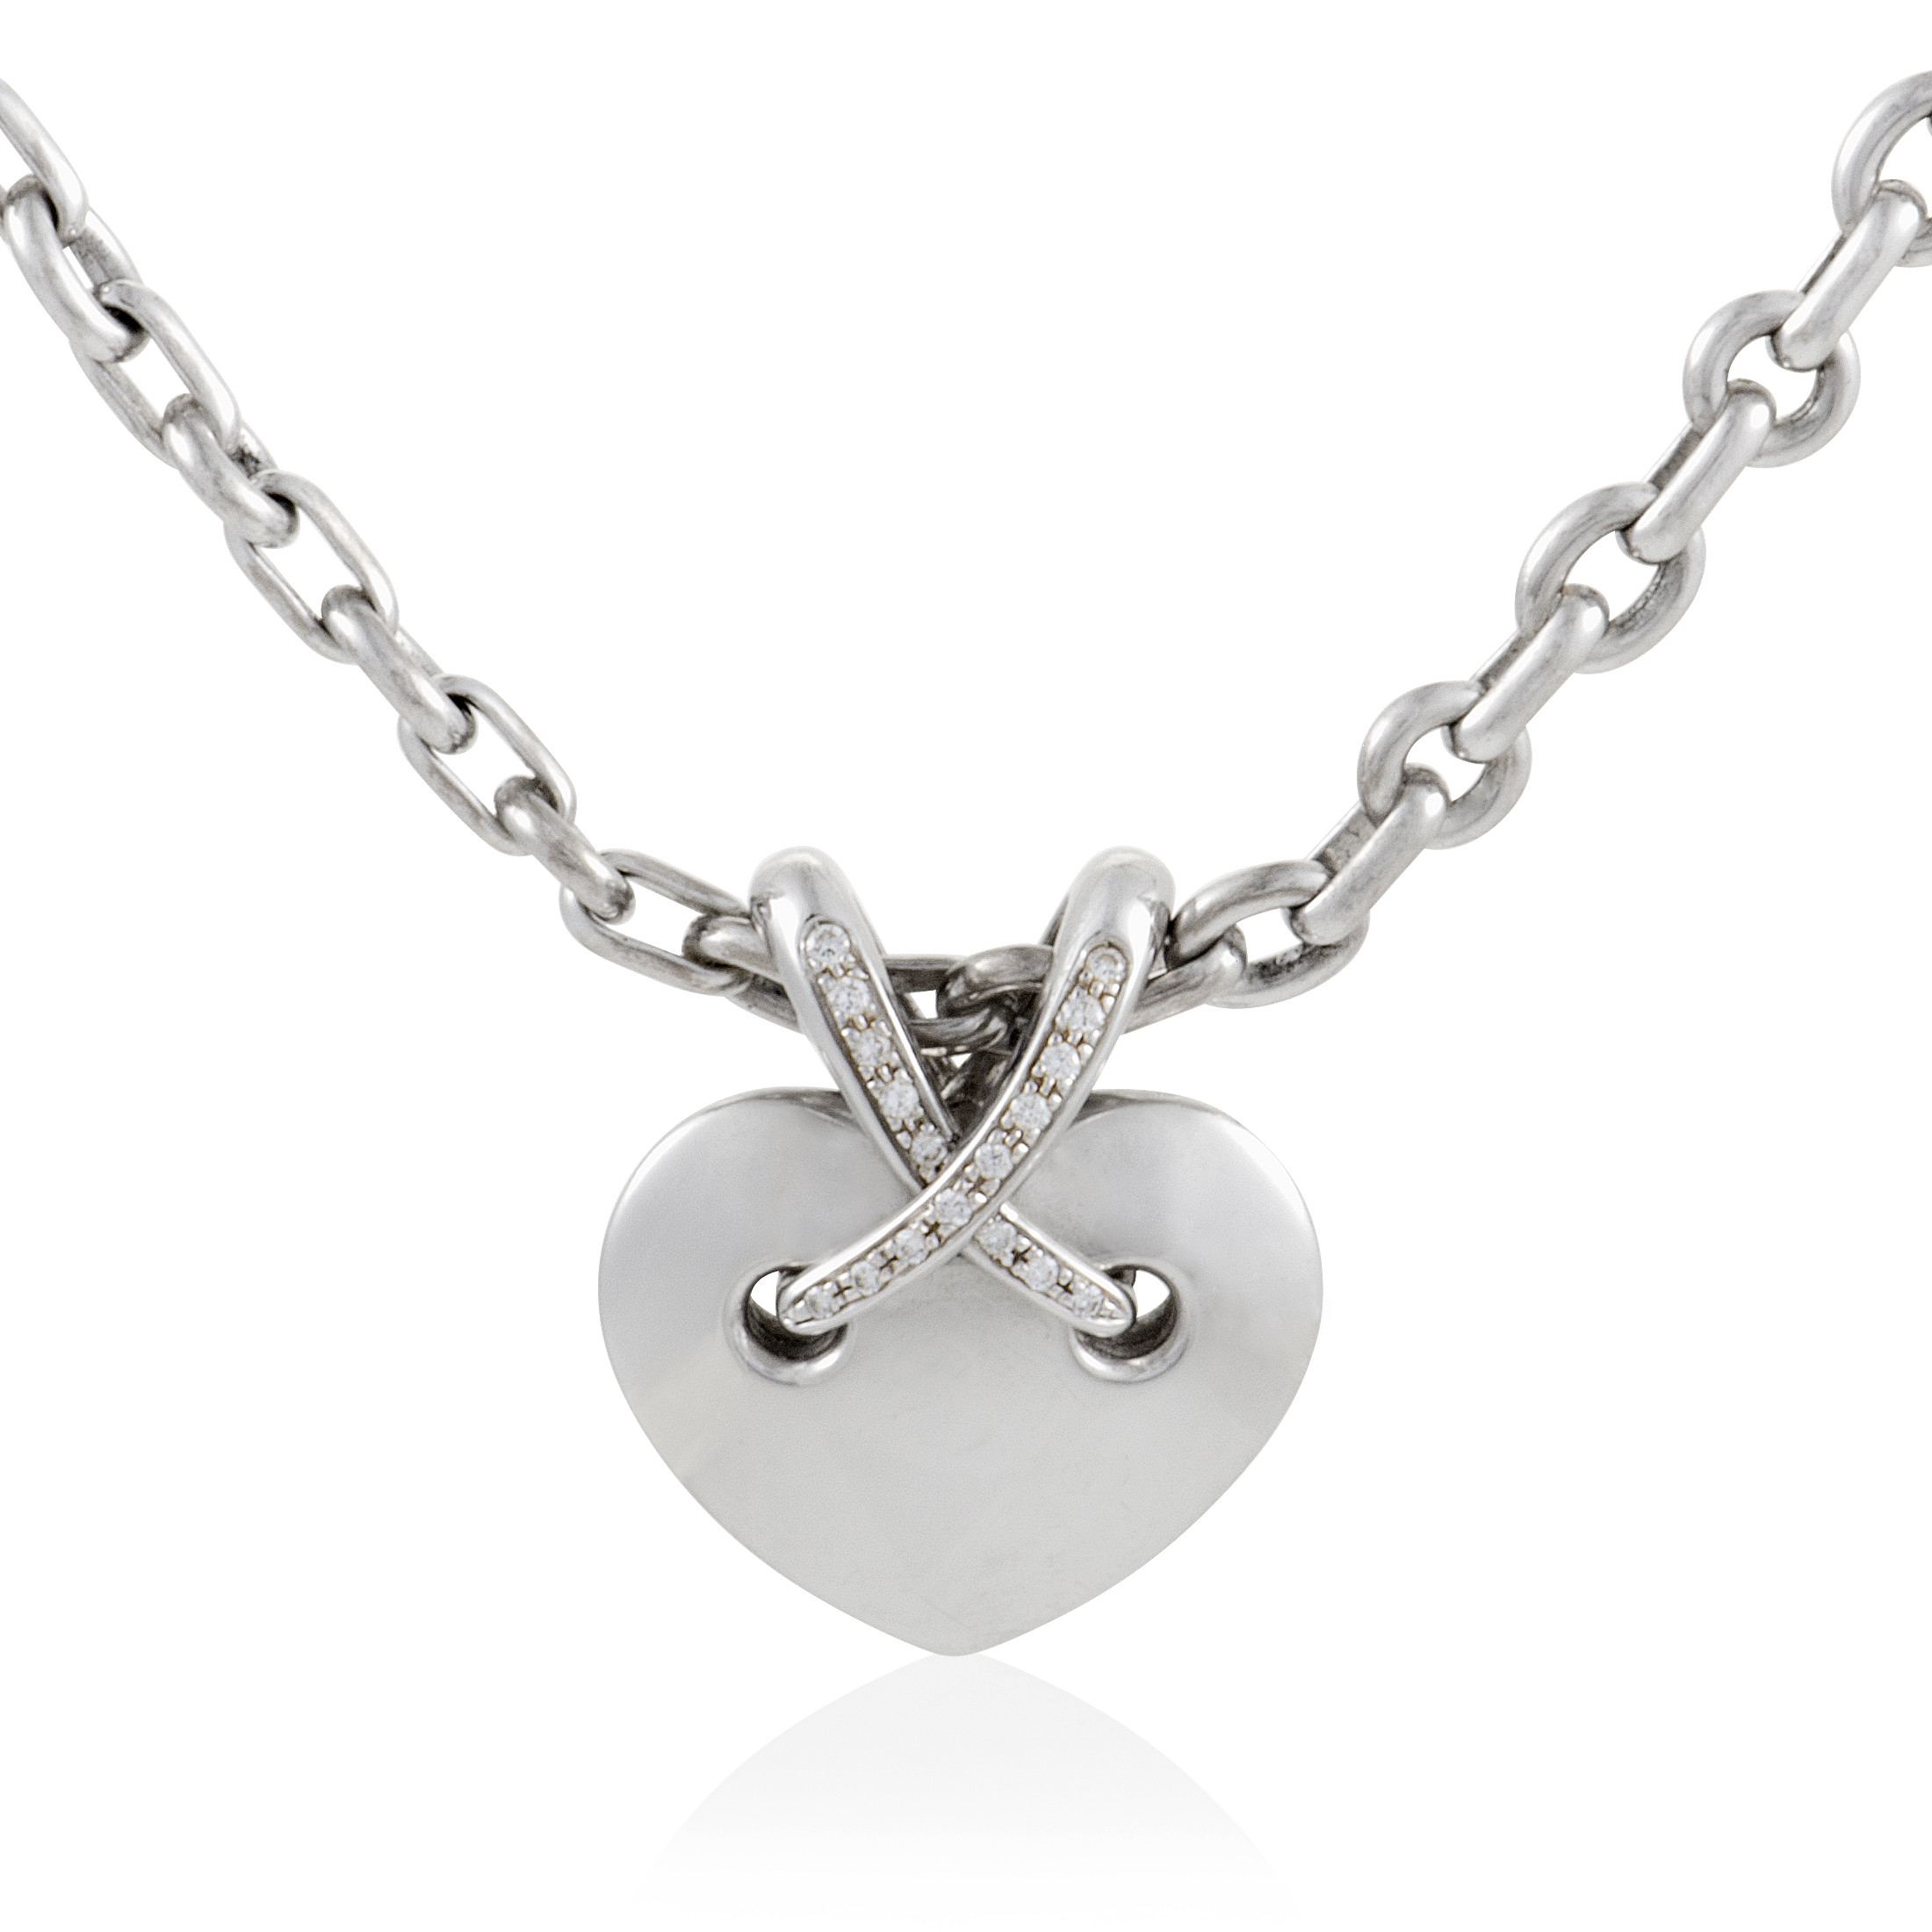 White Gold Heart Necklace
 Chaumet Liens Womens 18K White Gold Diamond Heart